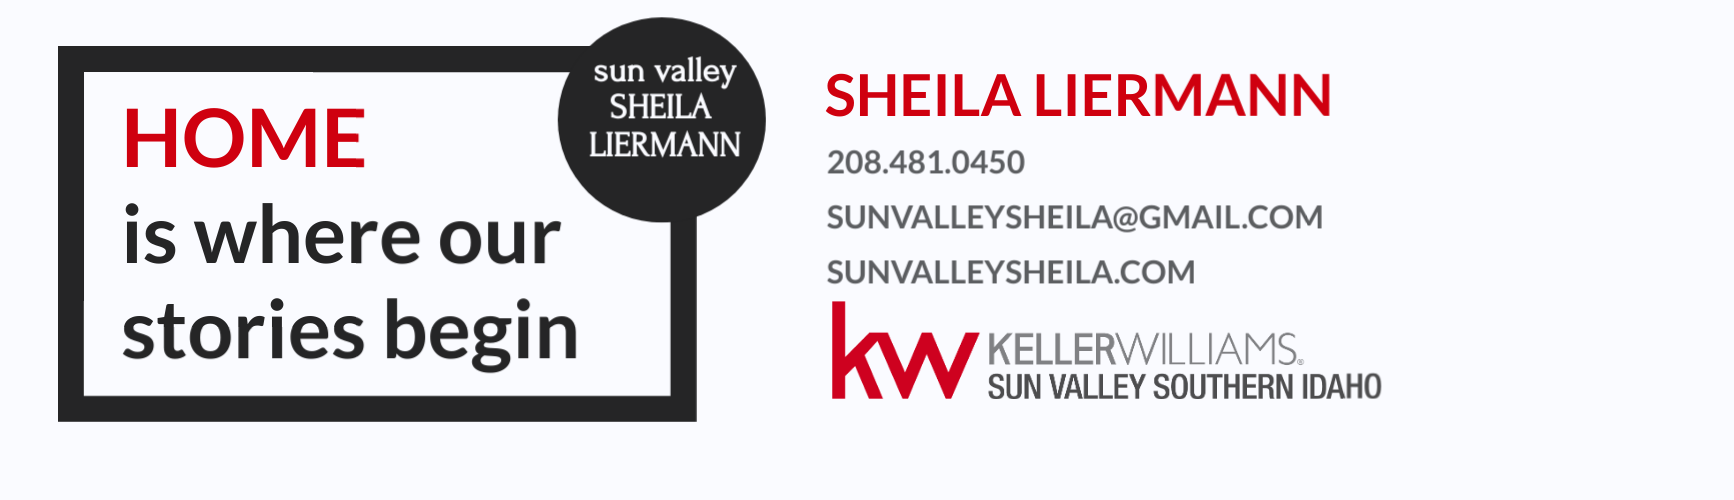 Sheila Liermann Contact Information 